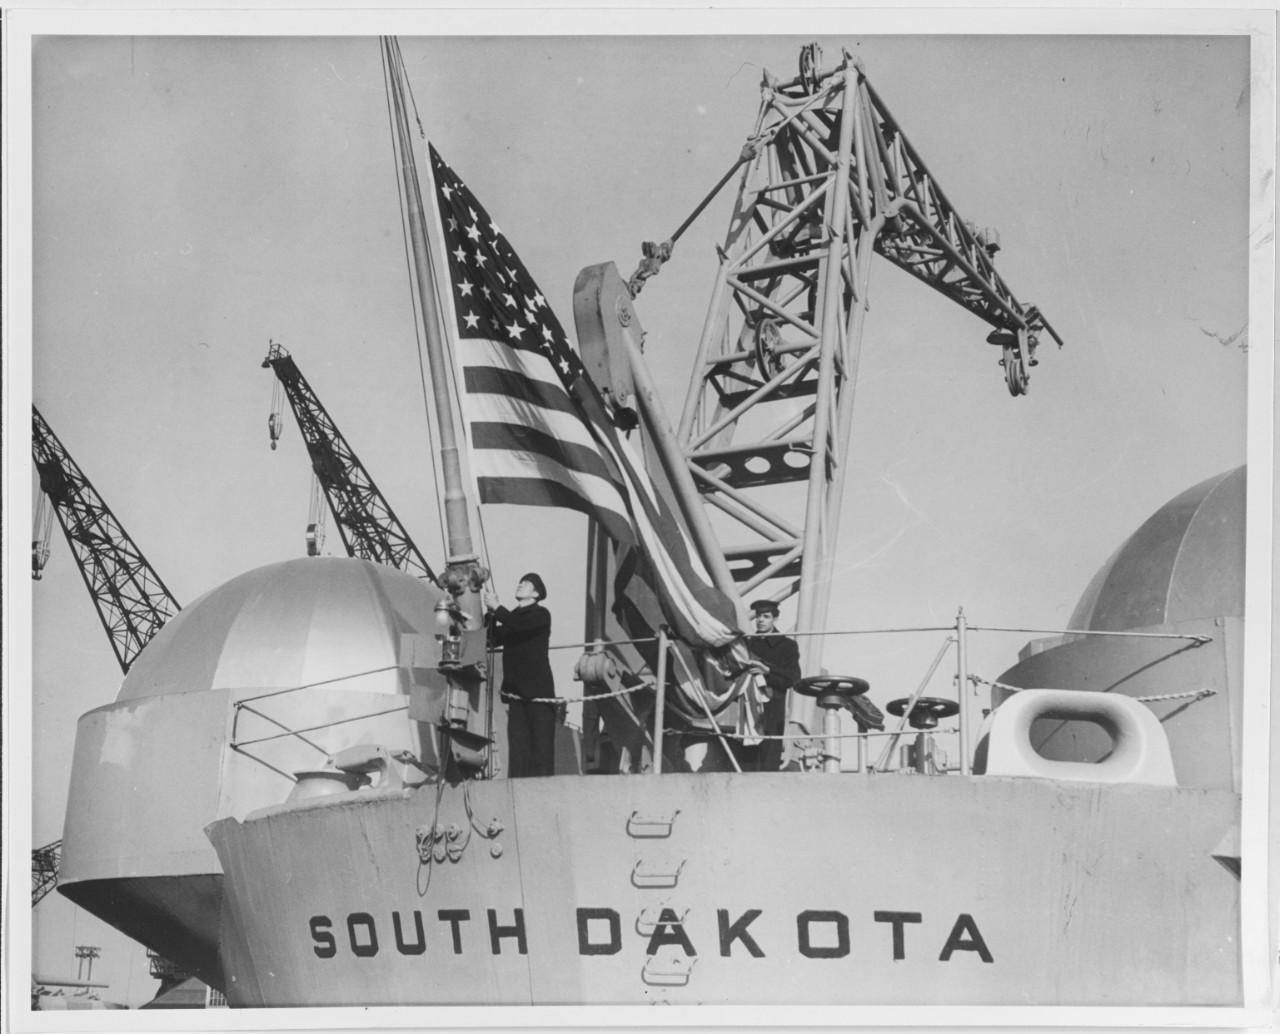 WW2 Naval Ships on Flags by Malj USS South Dakota BB-57 Battleship Diagram American Flag Throw Pillow Multicolor 18x18